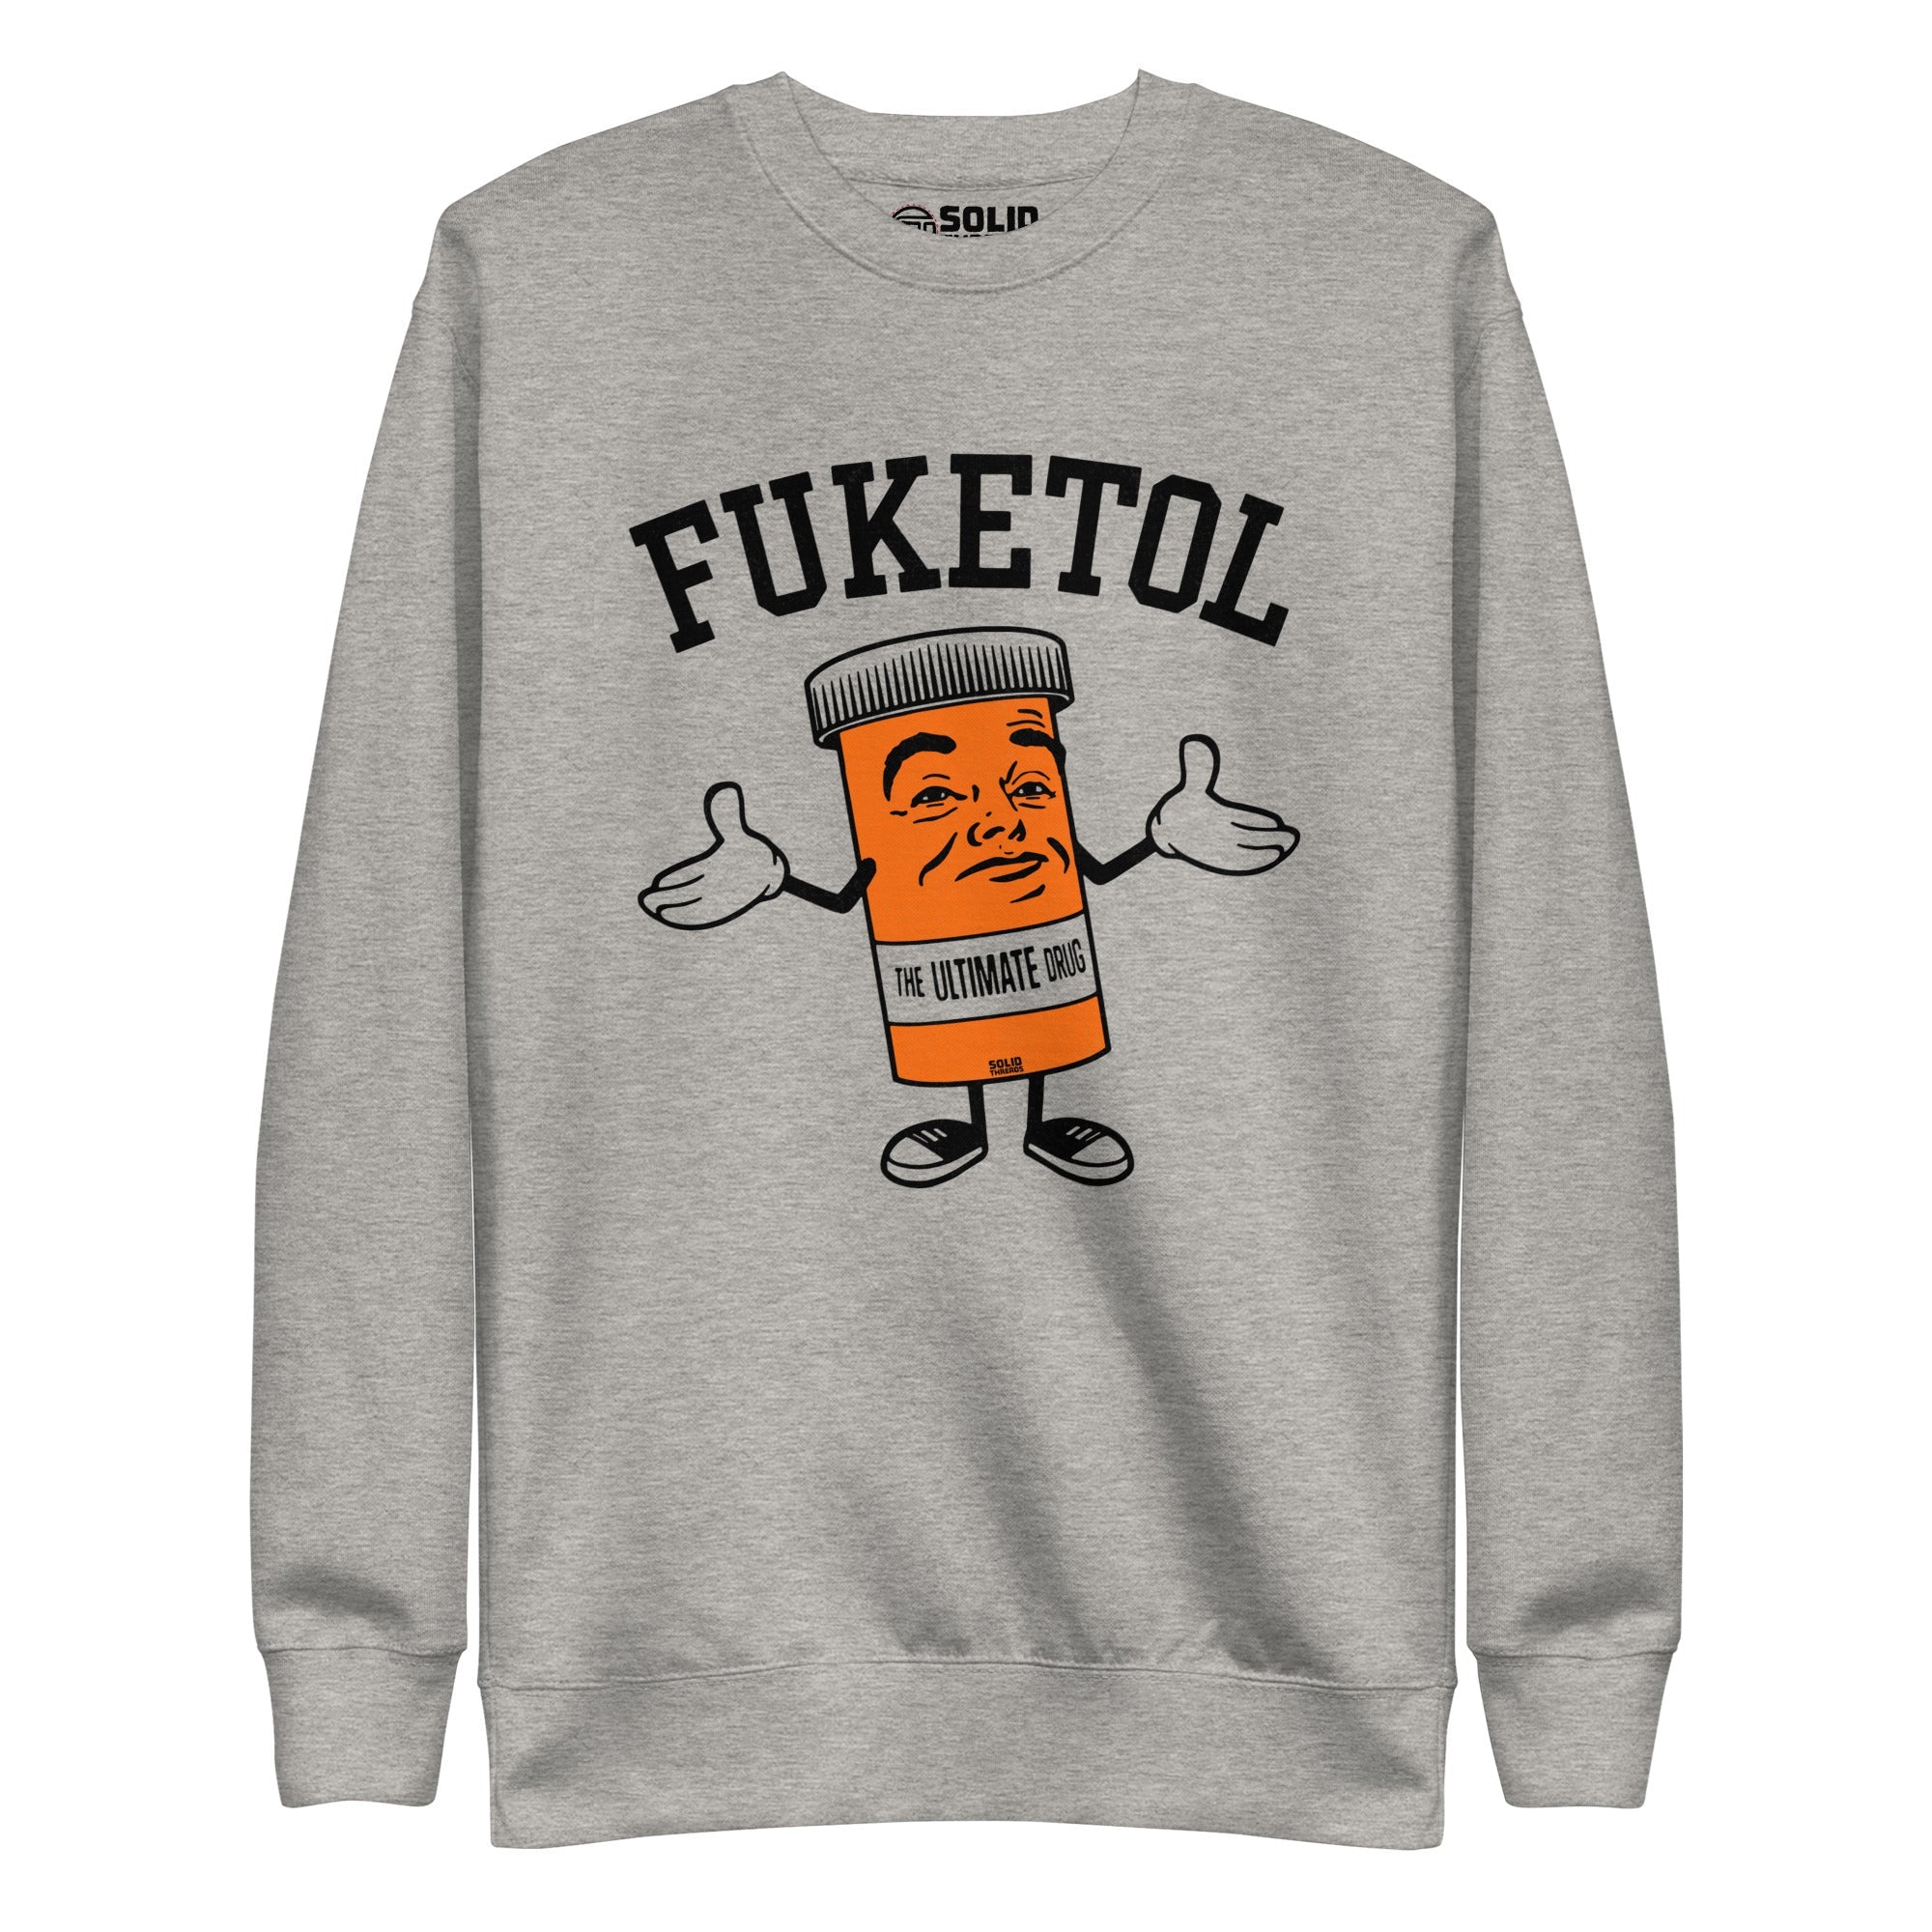 Men's Fuketol Retro Classic Sweatshirt | Funny Pill Bottle Fleece | Solid Threads